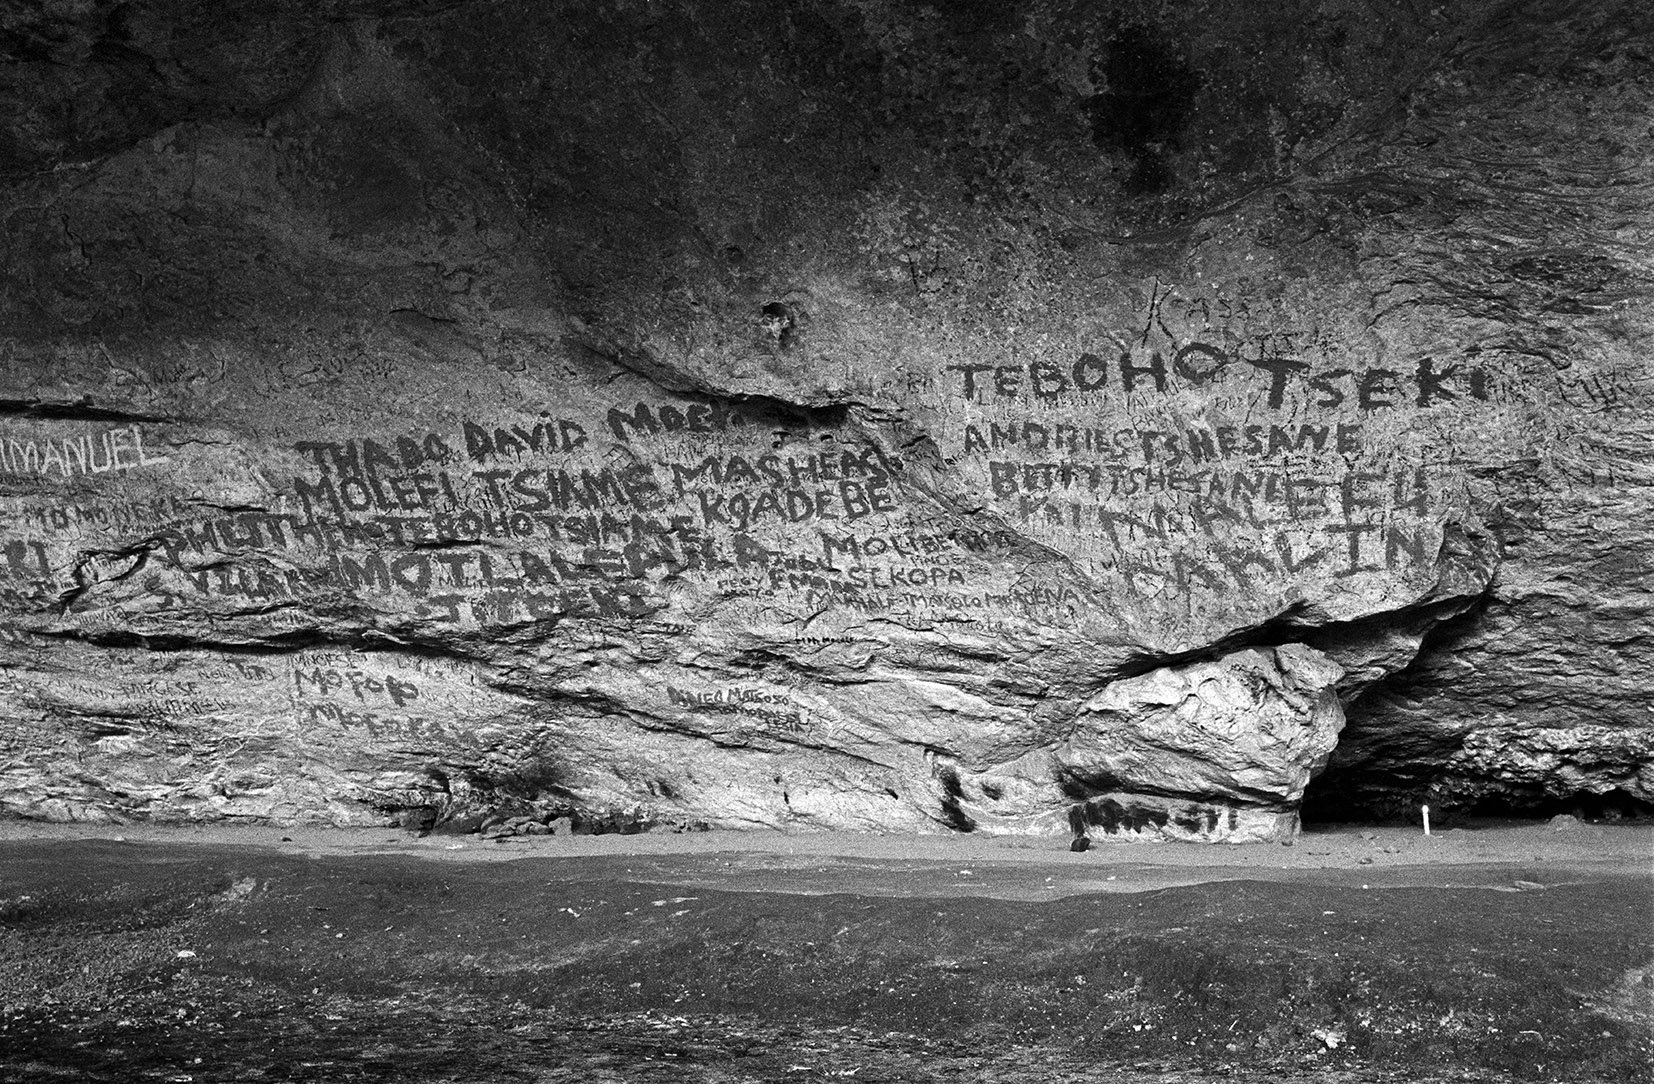  Rock Face Inside Cave, Motouleng Cave, Clarens/ 1996 